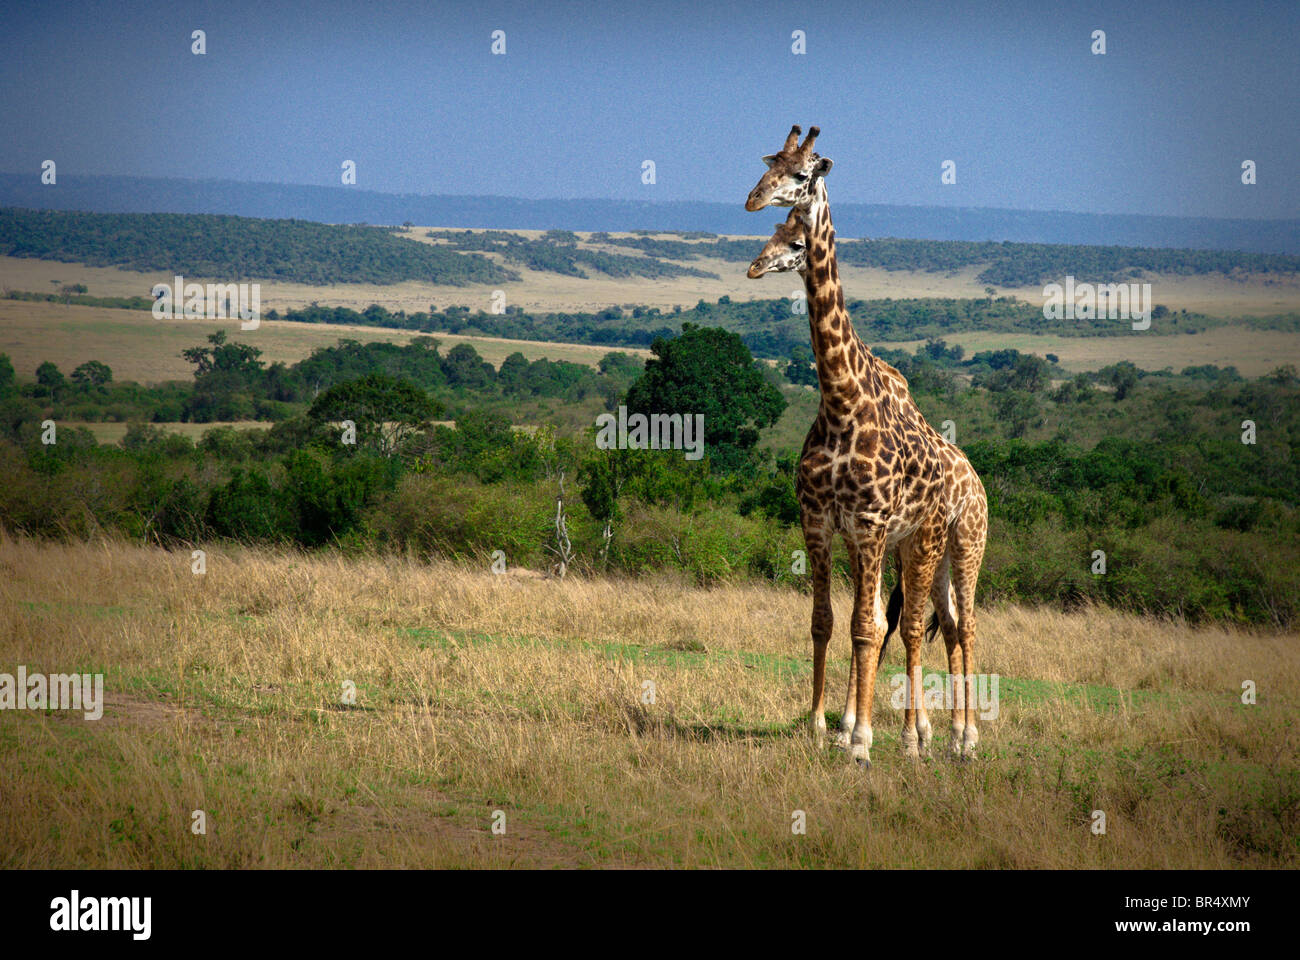 Pair of Masai Giraffes, Giraffa camelopardalis, Masai Mara National Reserve, Kenya, Africa Stock Photo